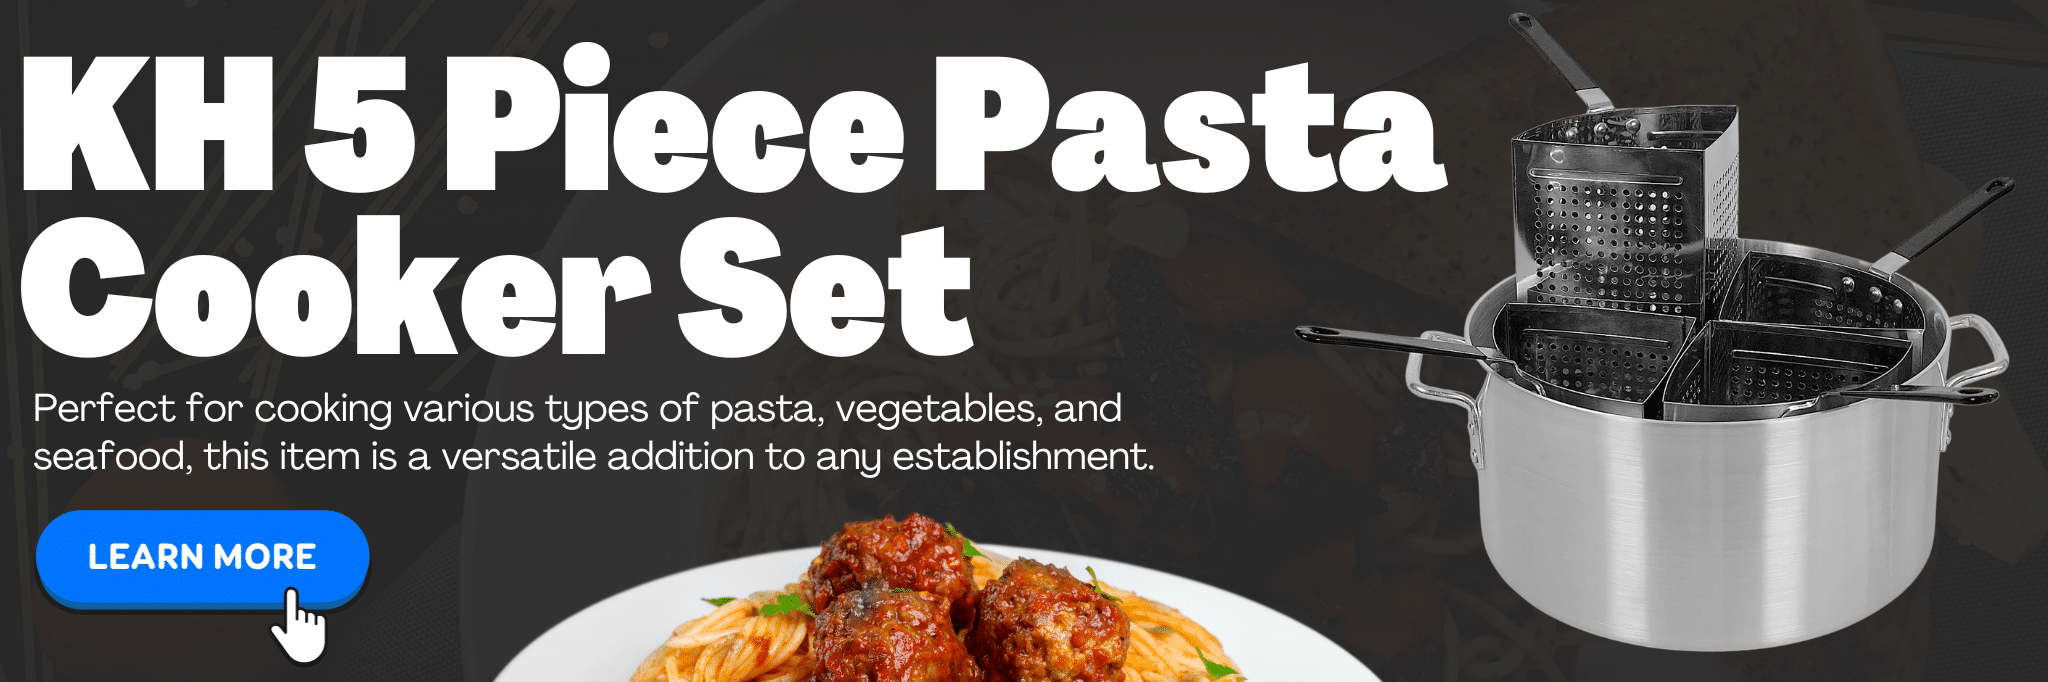 5 Piece Pasta Cooker Set